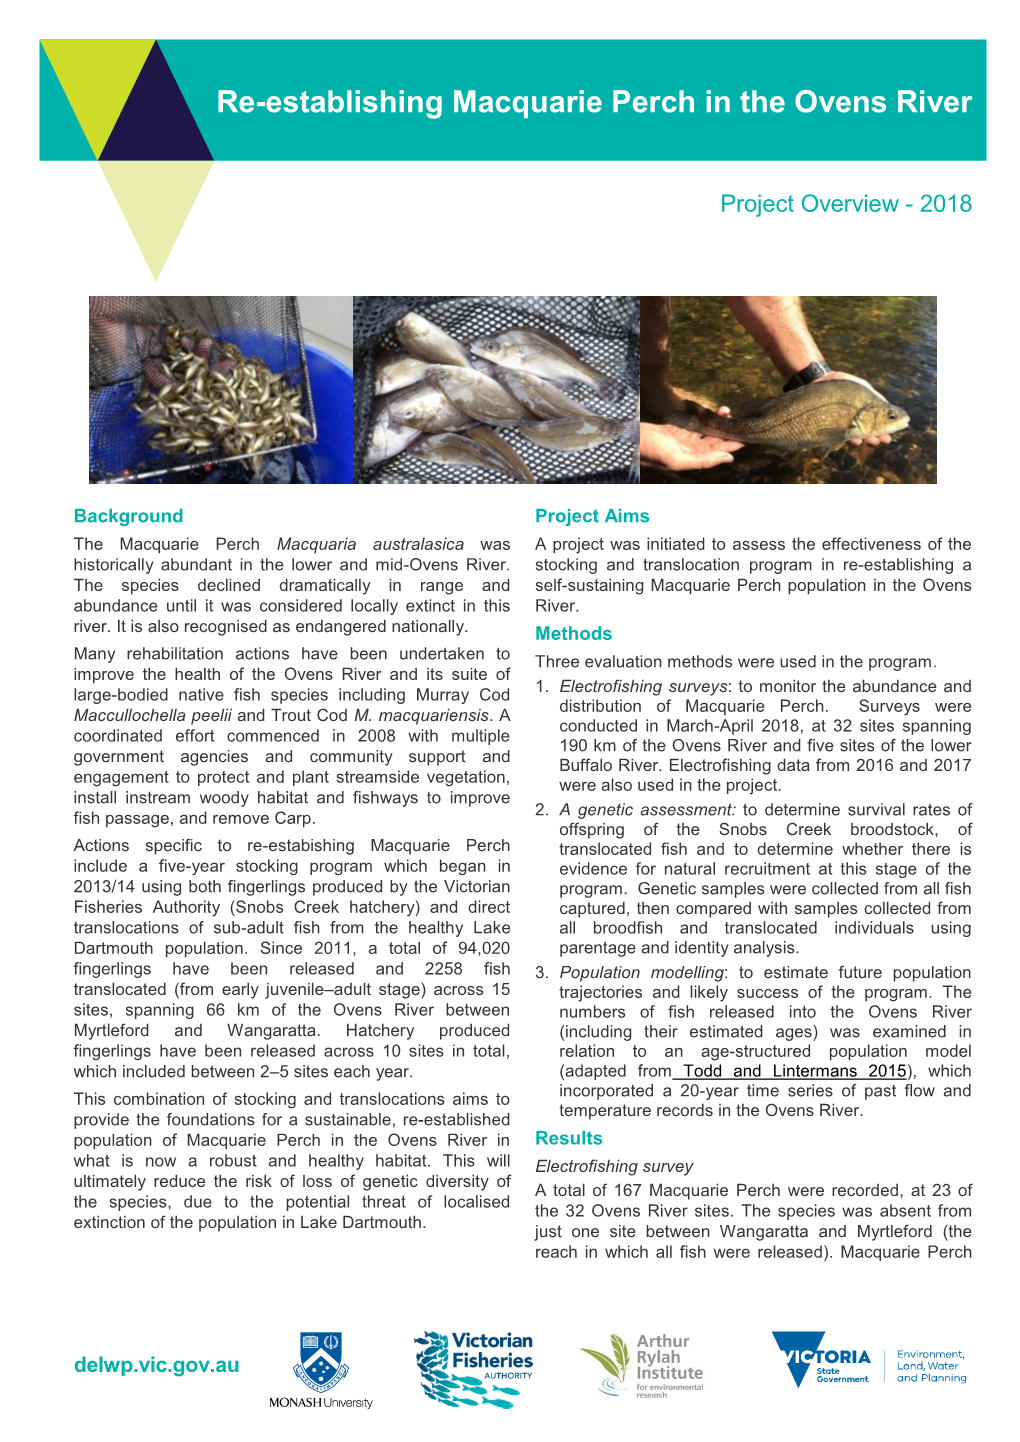 Re-Establishing Macquarie Perch in the Ovens River Fact Sheet